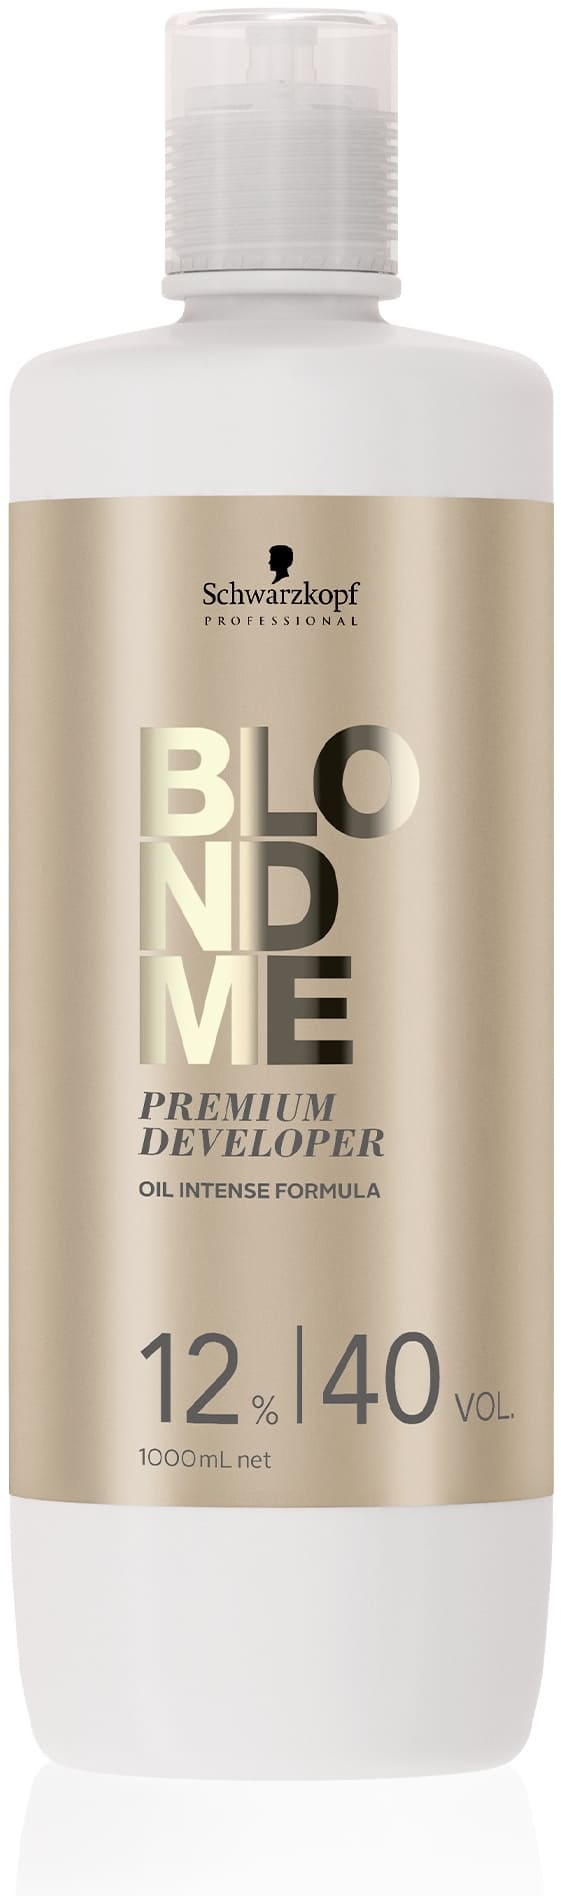 Schwarzkopf Blondme - Loção Ativadora Premium (12%) 40 Vol. 1000 ml 